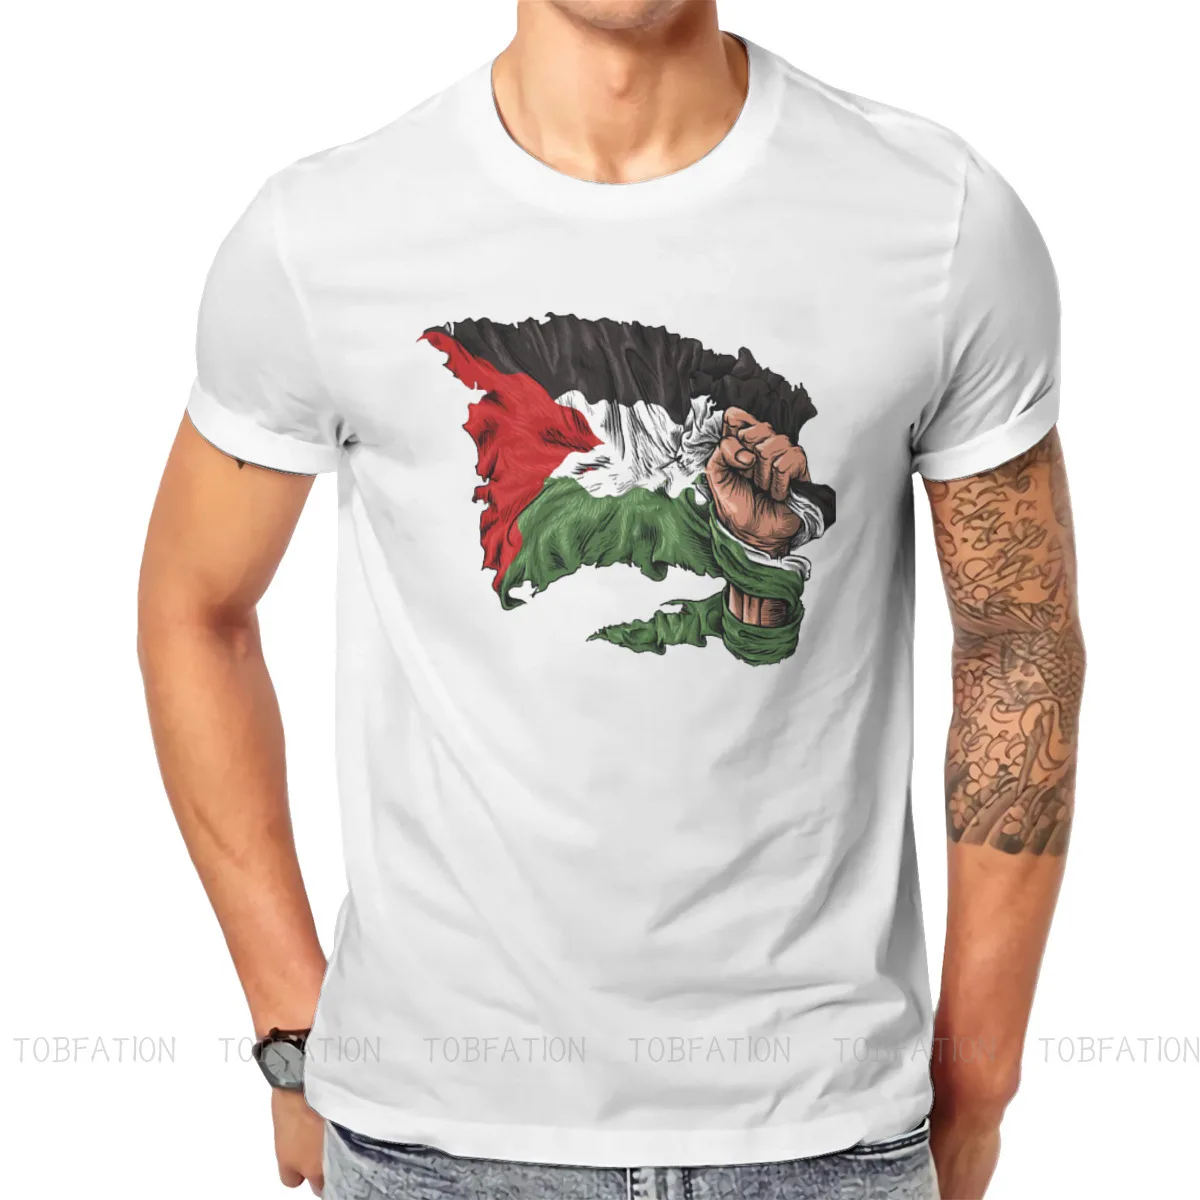 Hand Casual TShirt Free Palestine Creative Tops Leisure T Shirt Male Short Sleeve Gift Idea